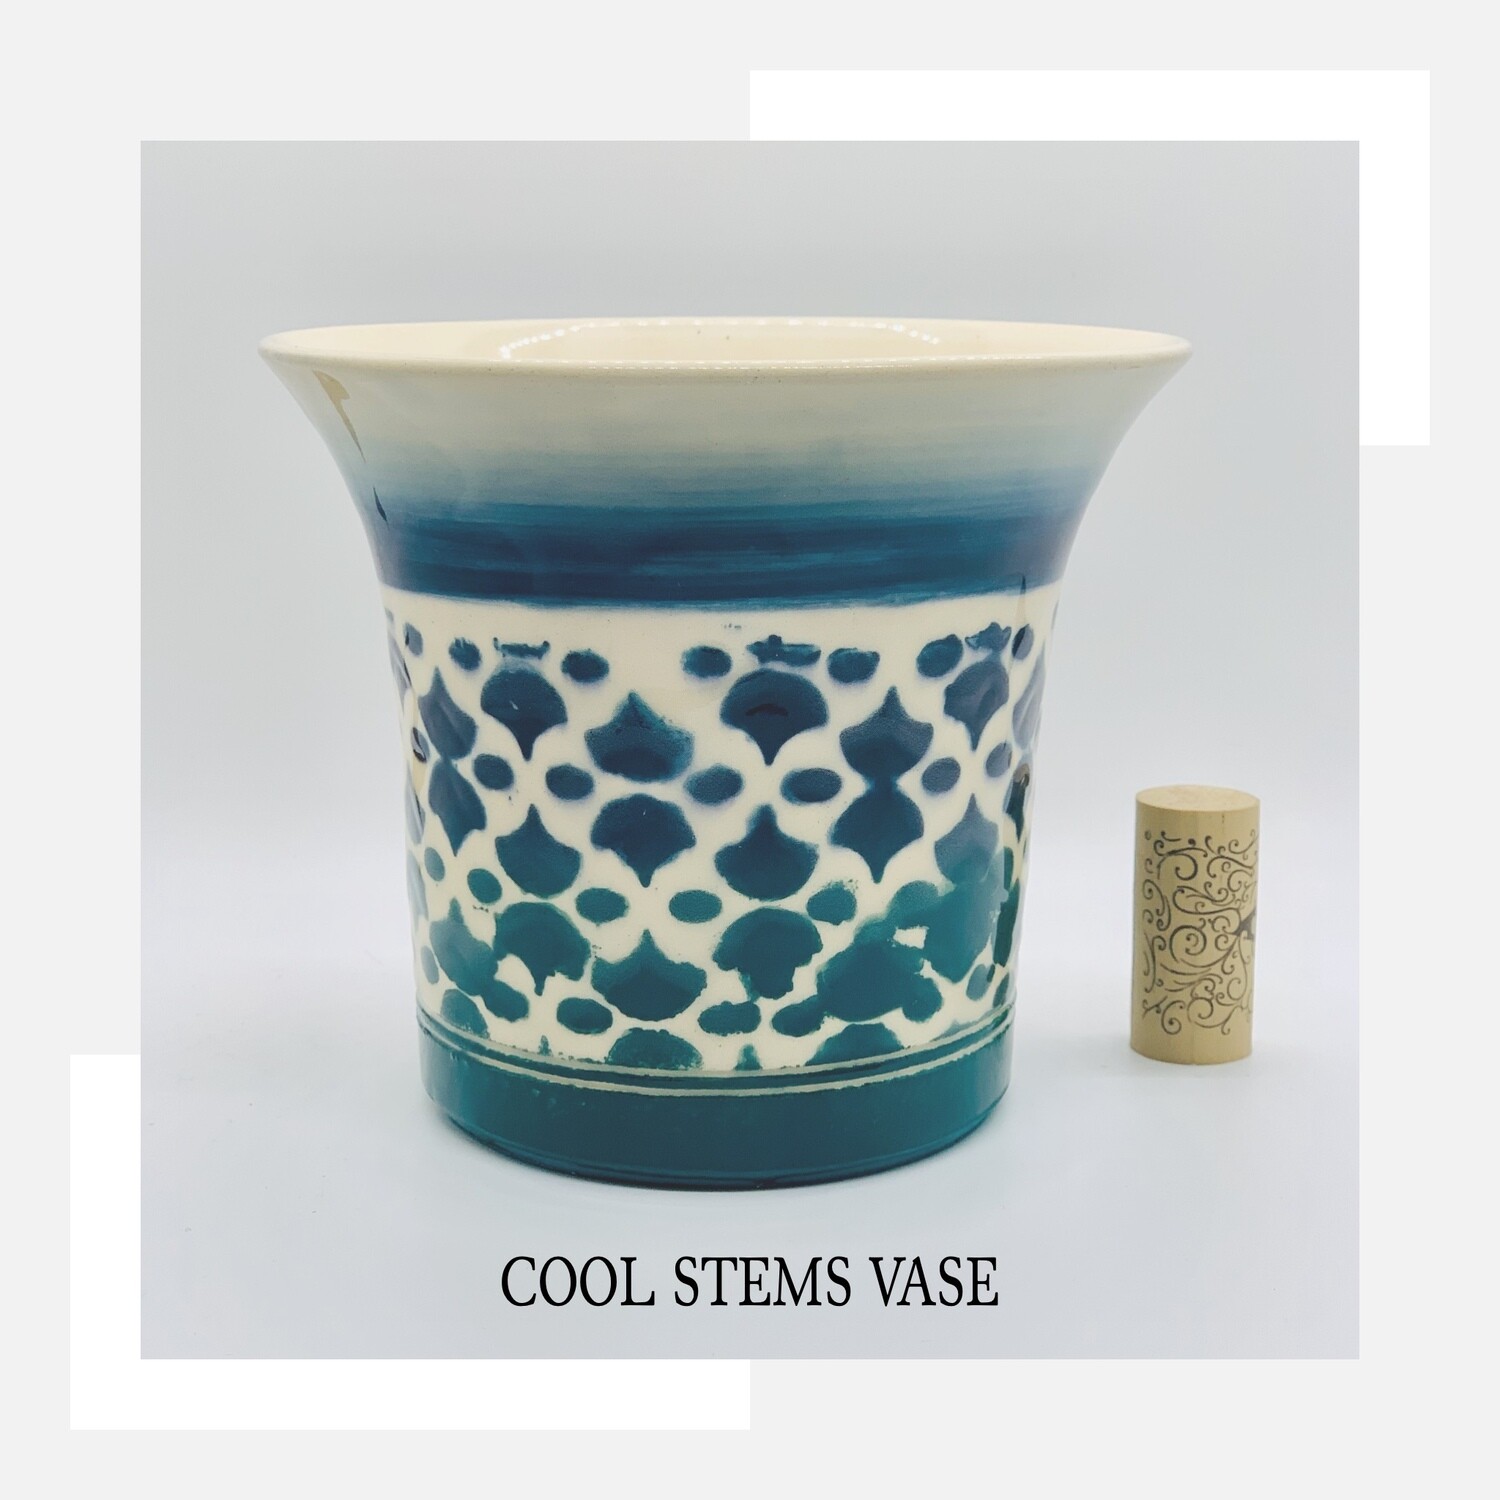 Cool Stems Vase